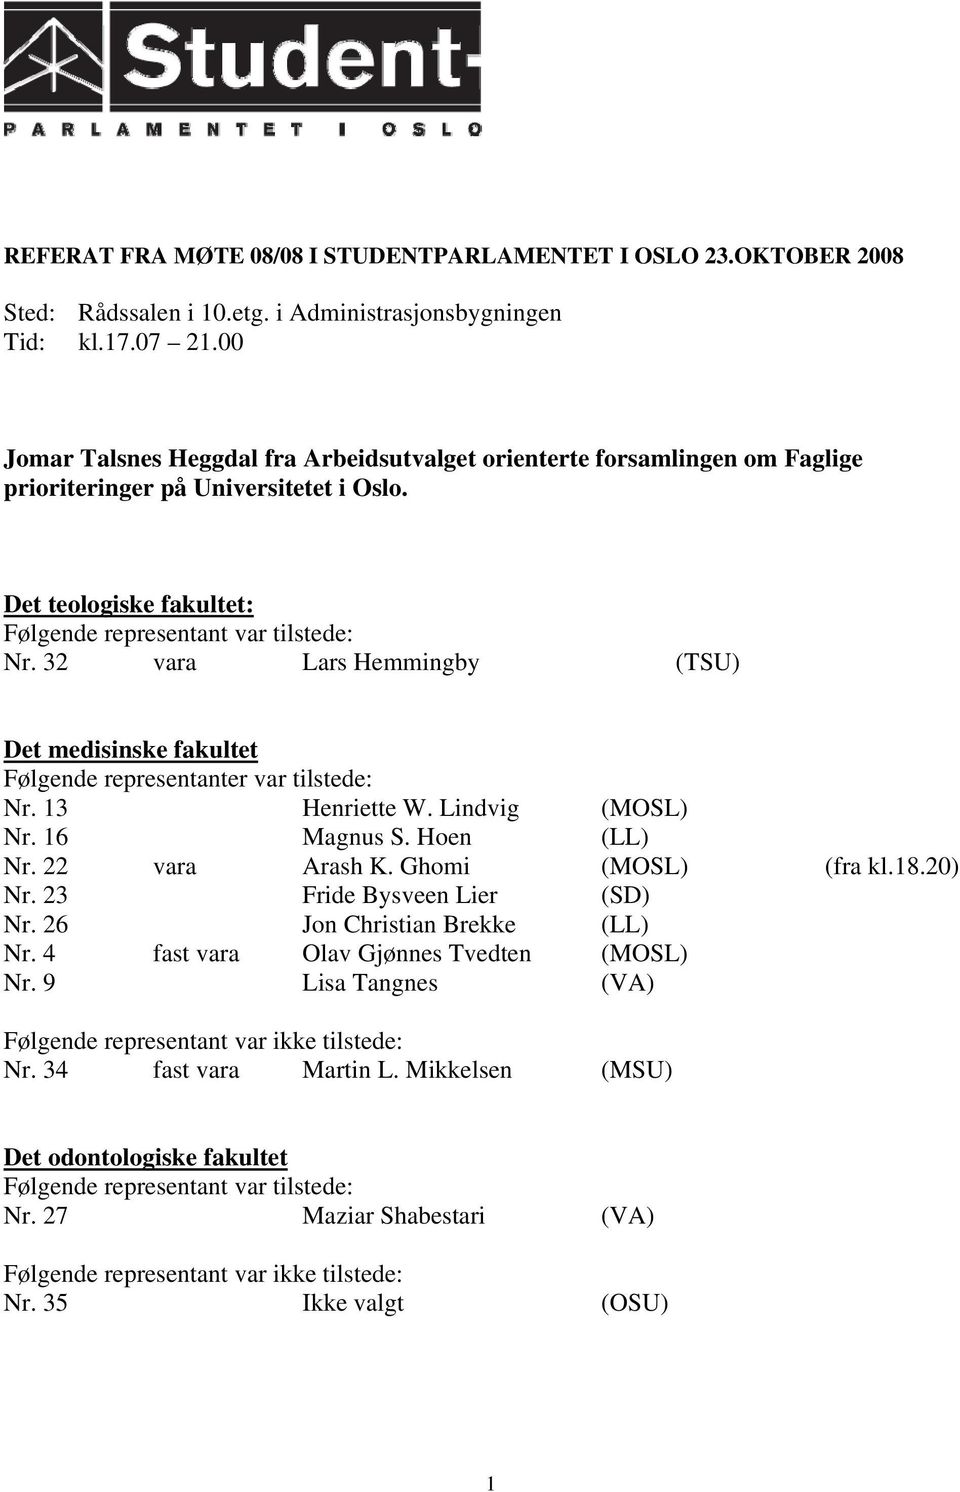 32 vara Lars Hemmingby (TSU) Det medisinske fakultet Følgende representanter var tilstede: Nr. 13 Henriette W. Lindvig (MOSL) Nr. 16 Magnus S. Hoen (LL) Nr. 22 vara Arash K. Ghomi (MOSL) (fra kl.18.